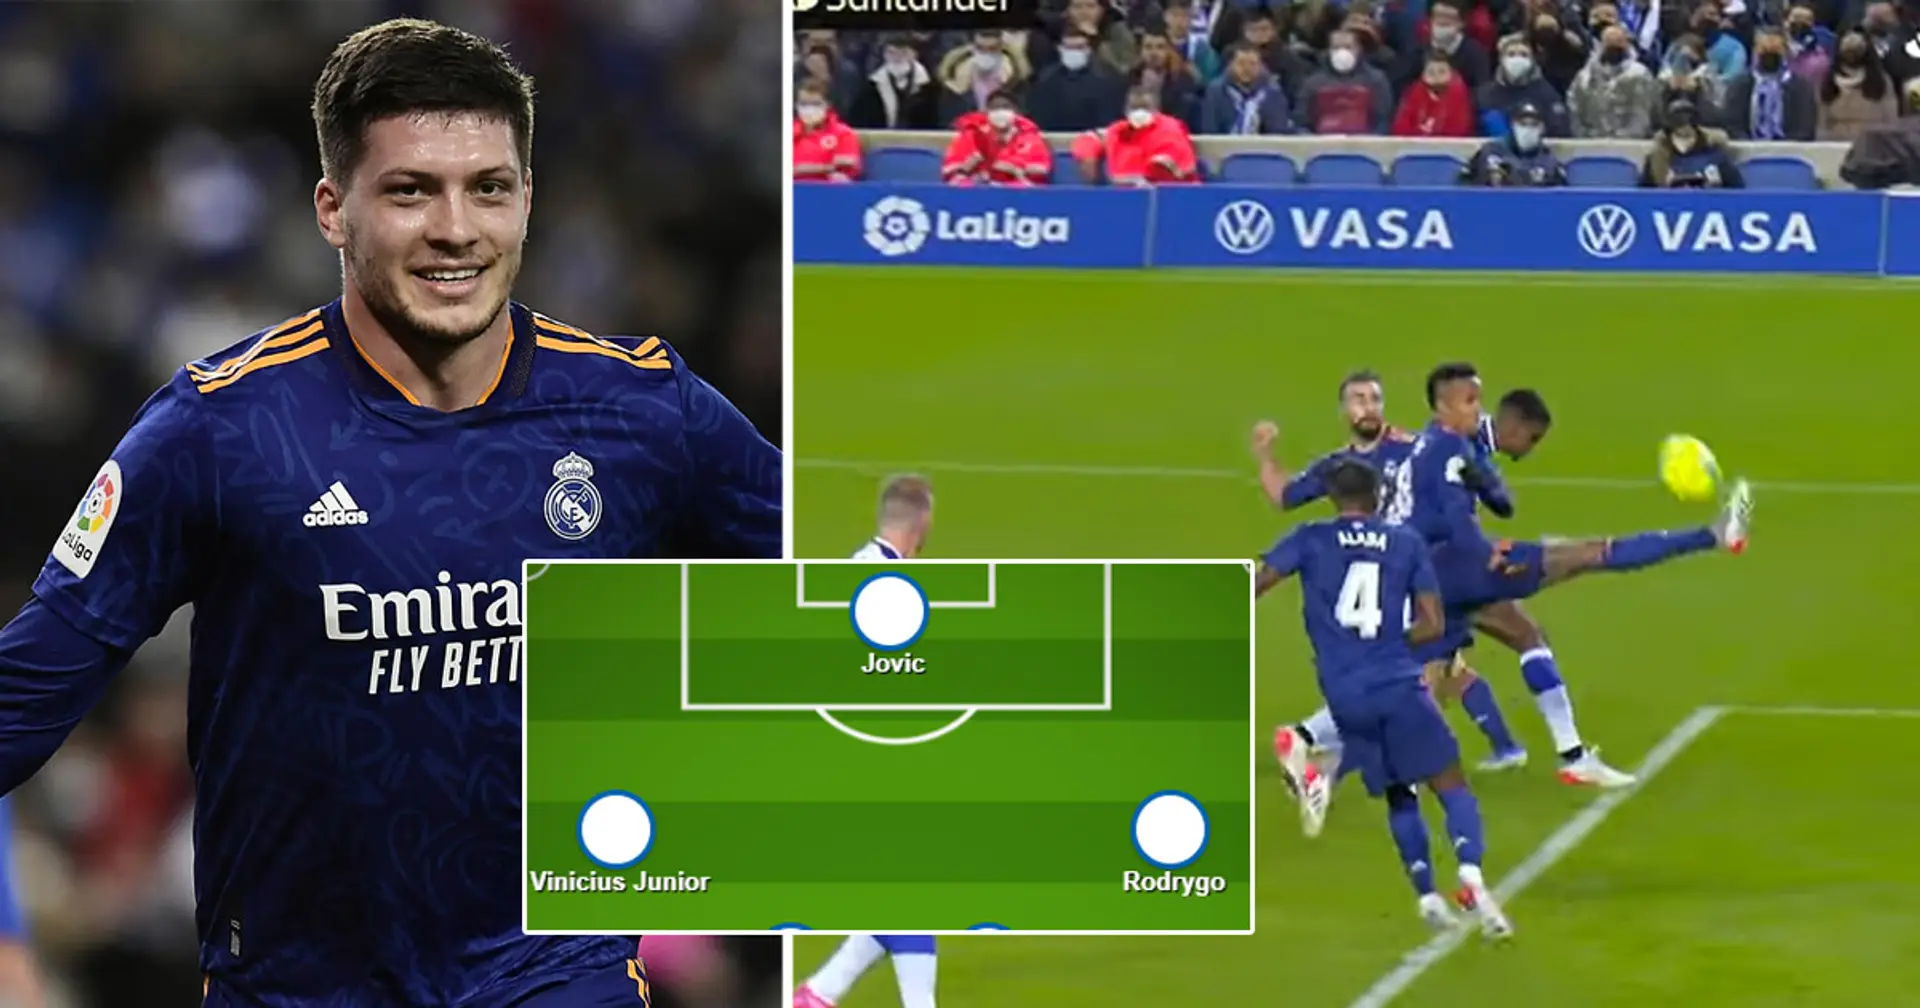 Rating Real Madrid performance vs Real Sociedad based on 4 key factors